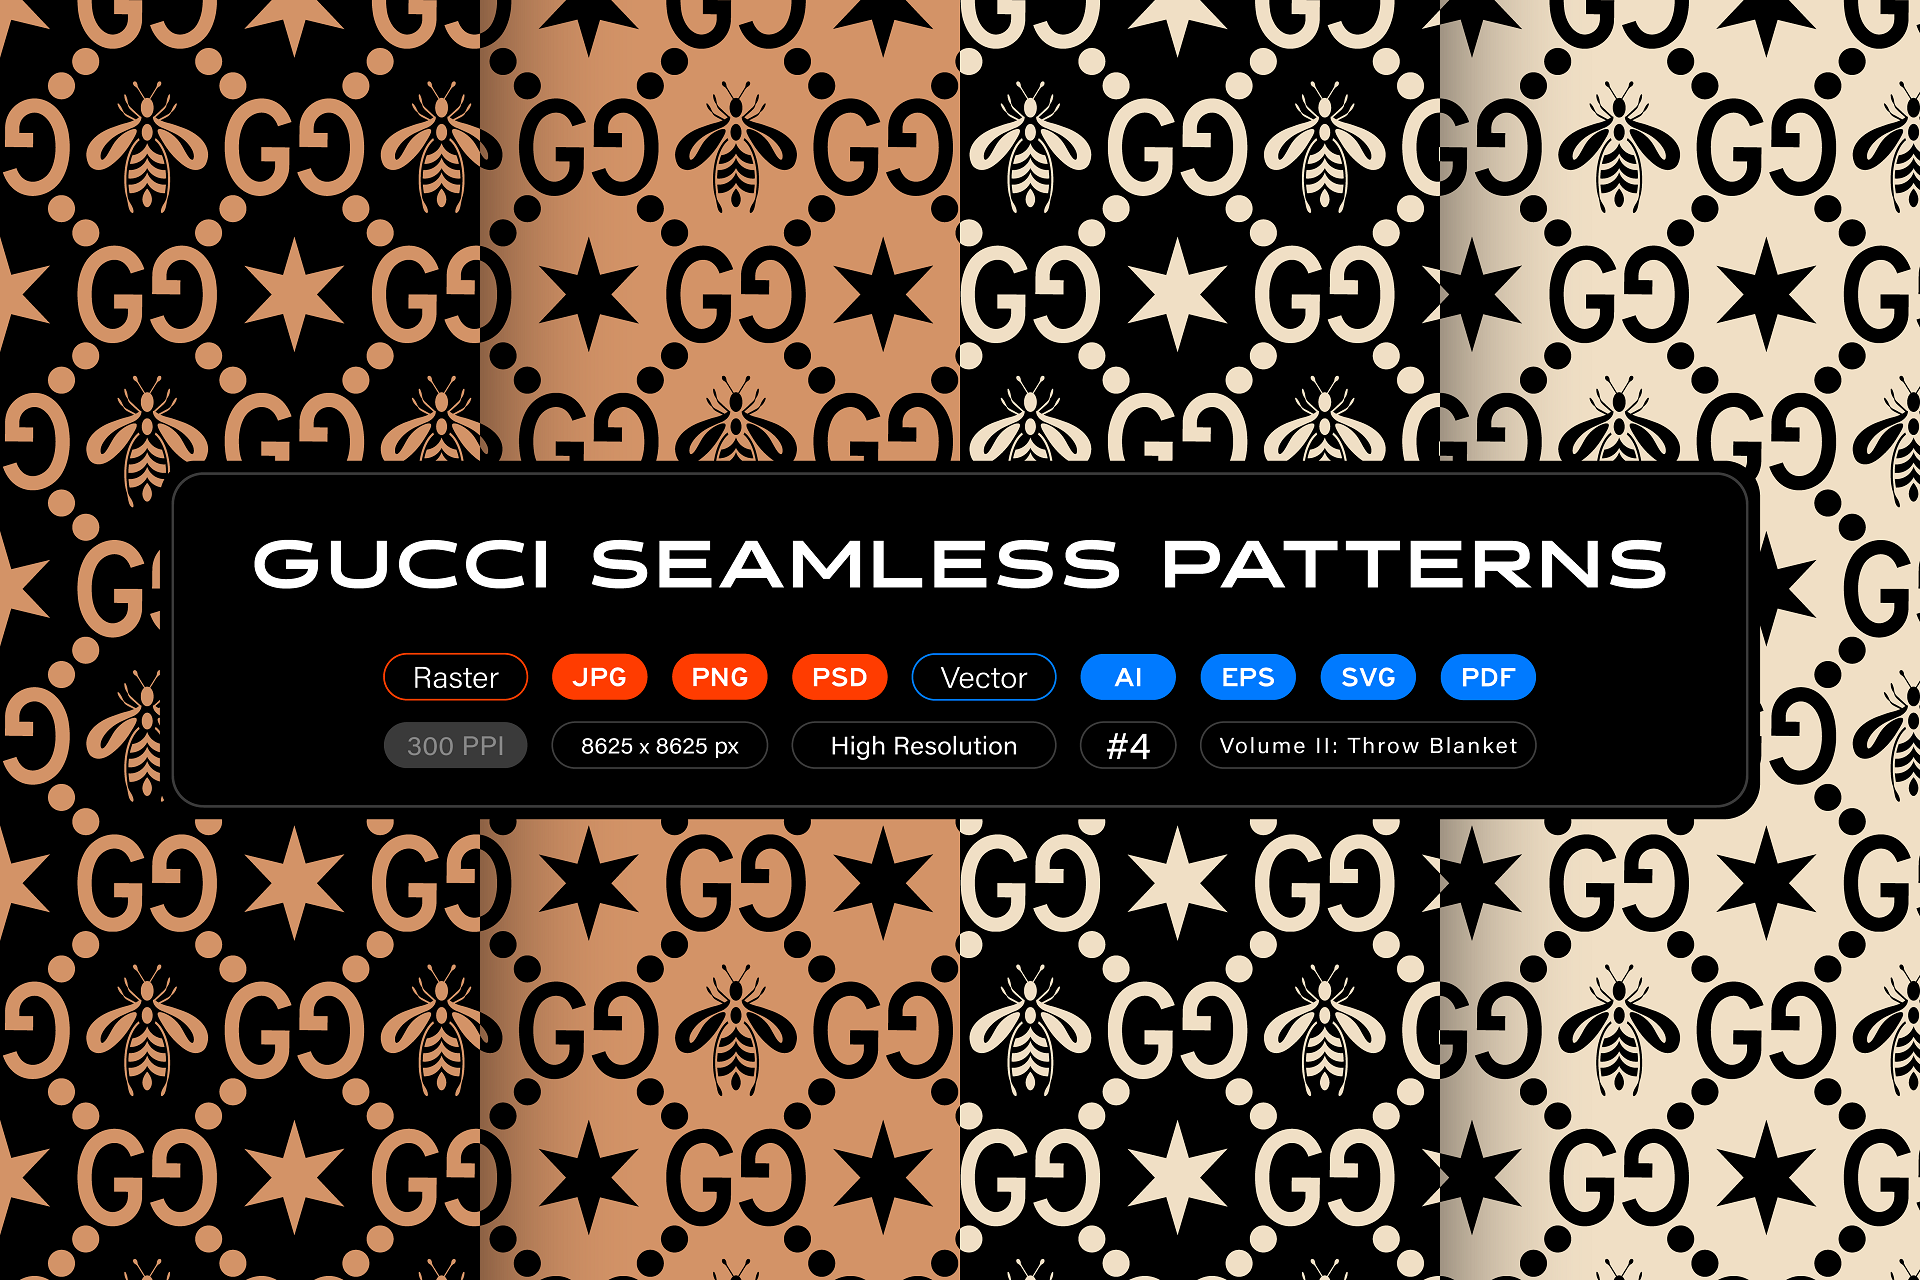 Gucci Seamless Patterns, Vol. 2: Throw Blanket by itsfarahbakhsh on  DeviantArt